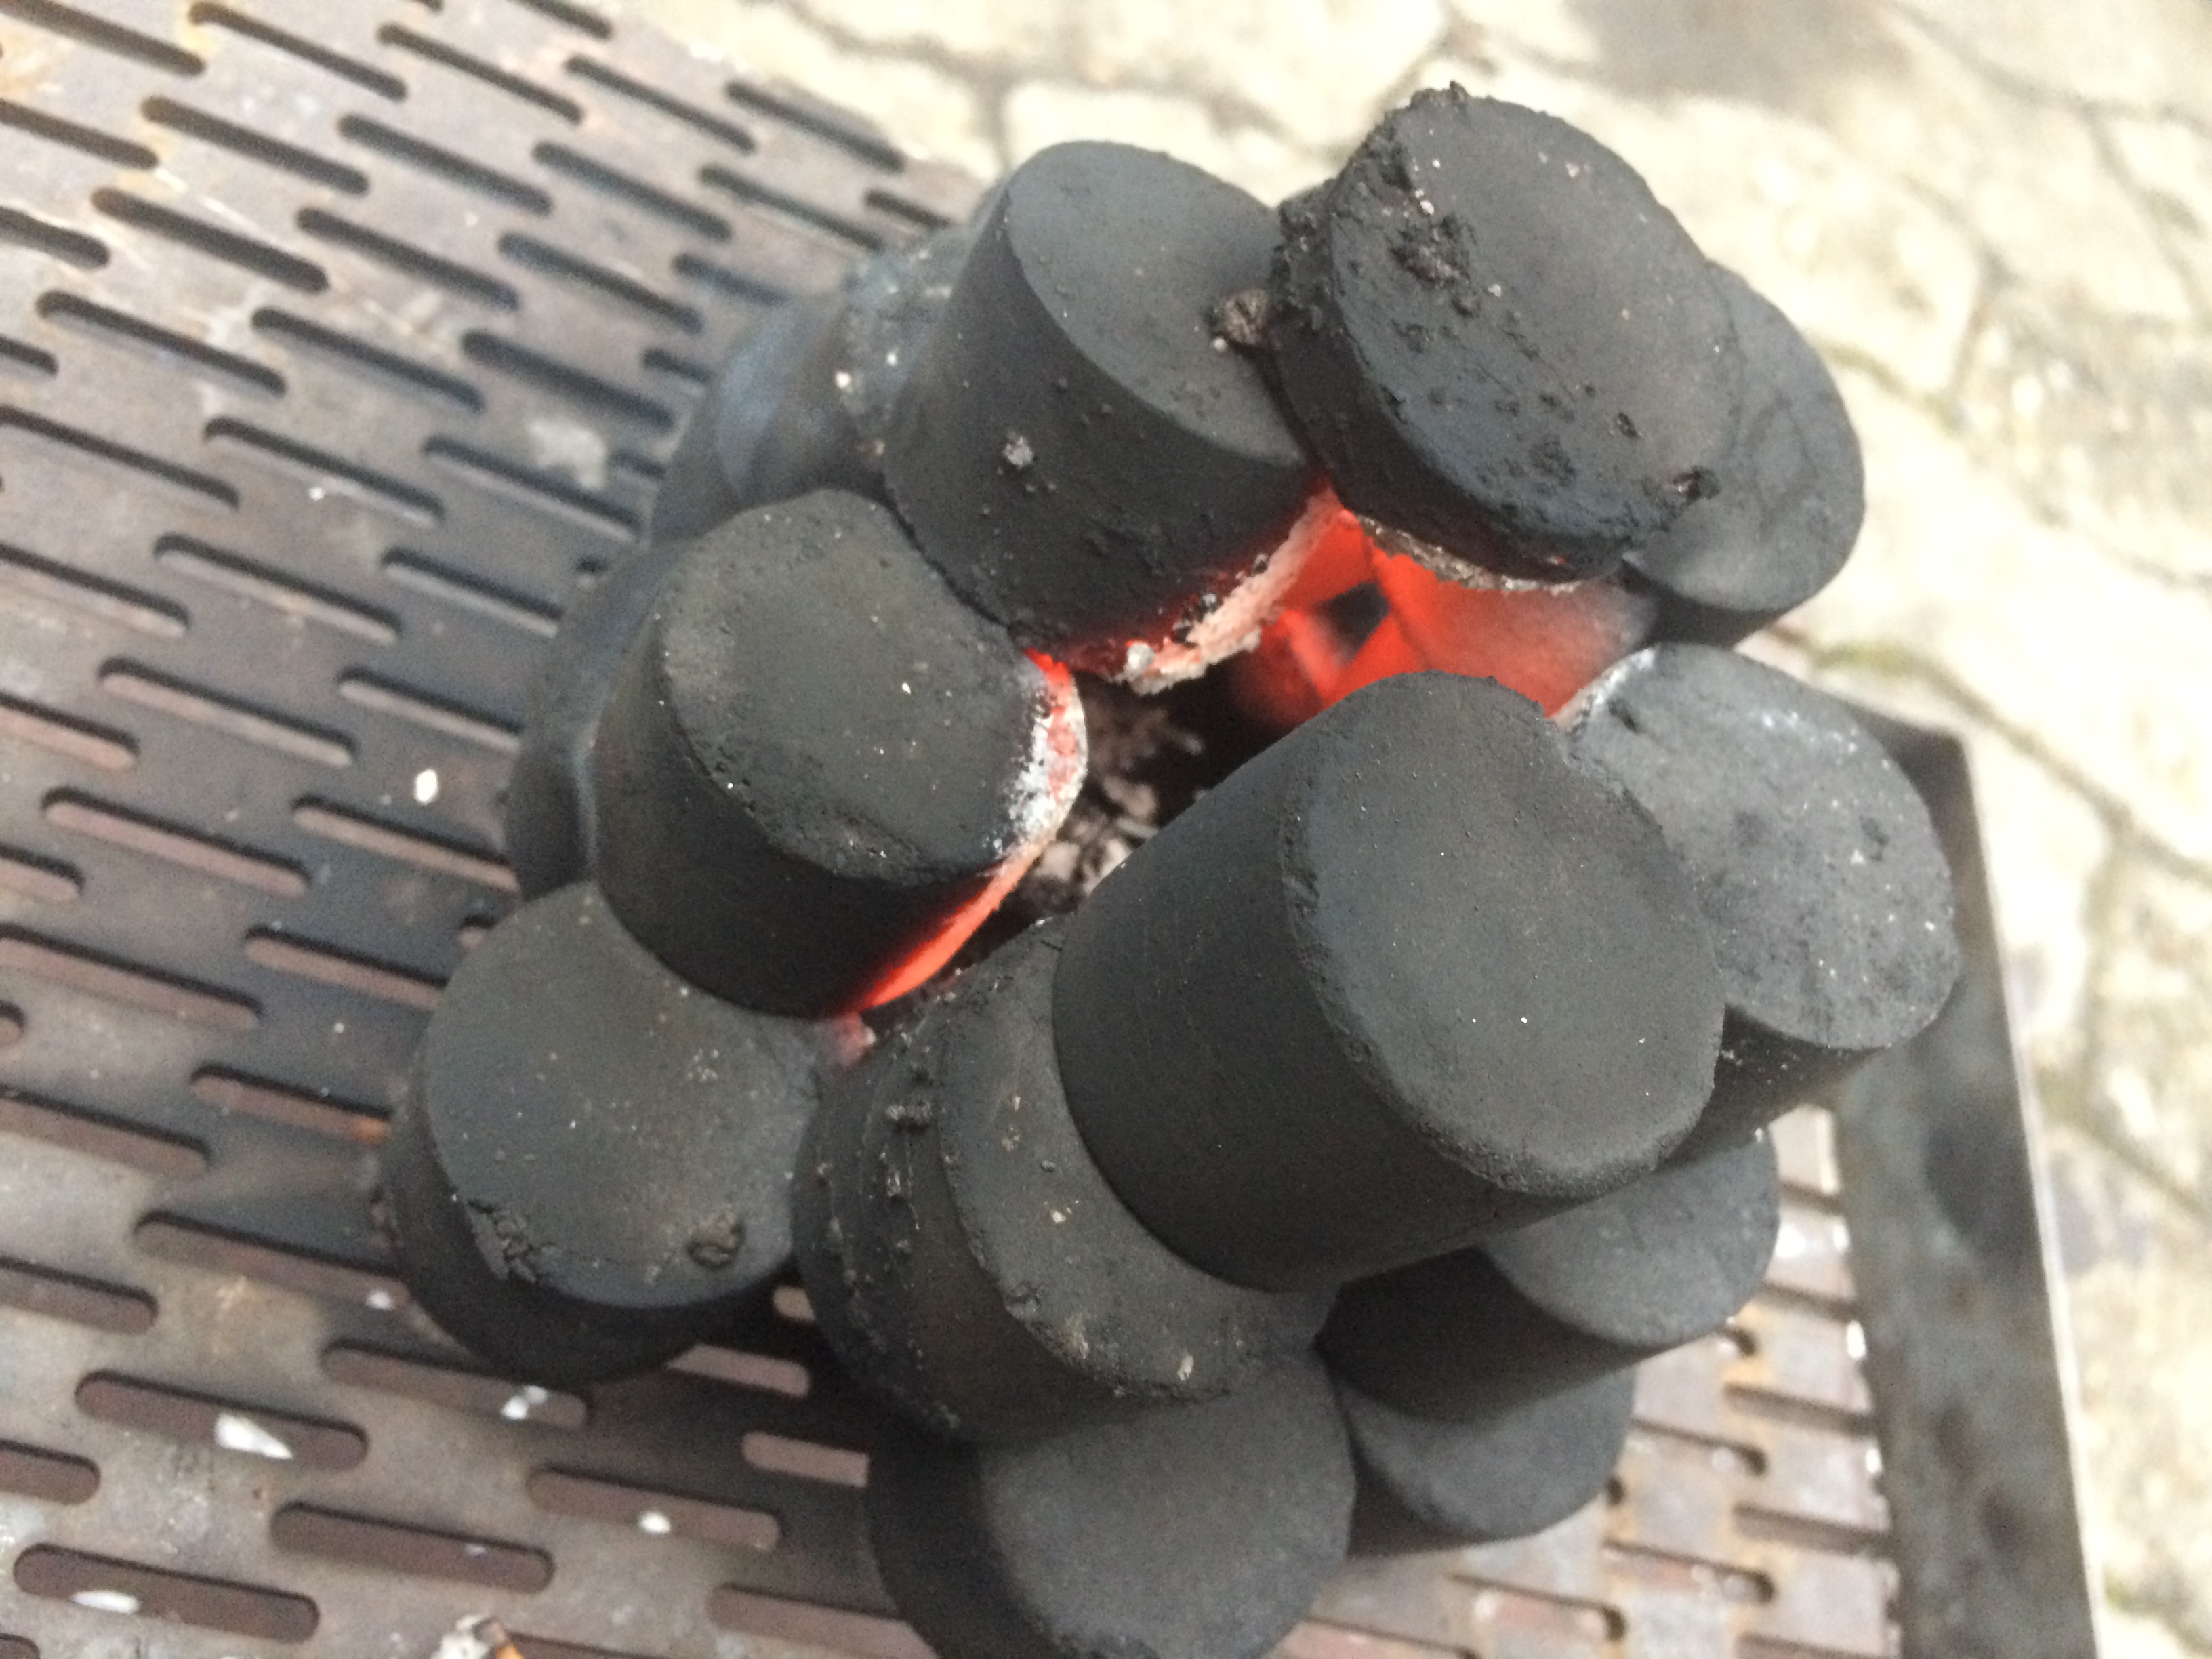 barbecue coal briquettes from spent grain